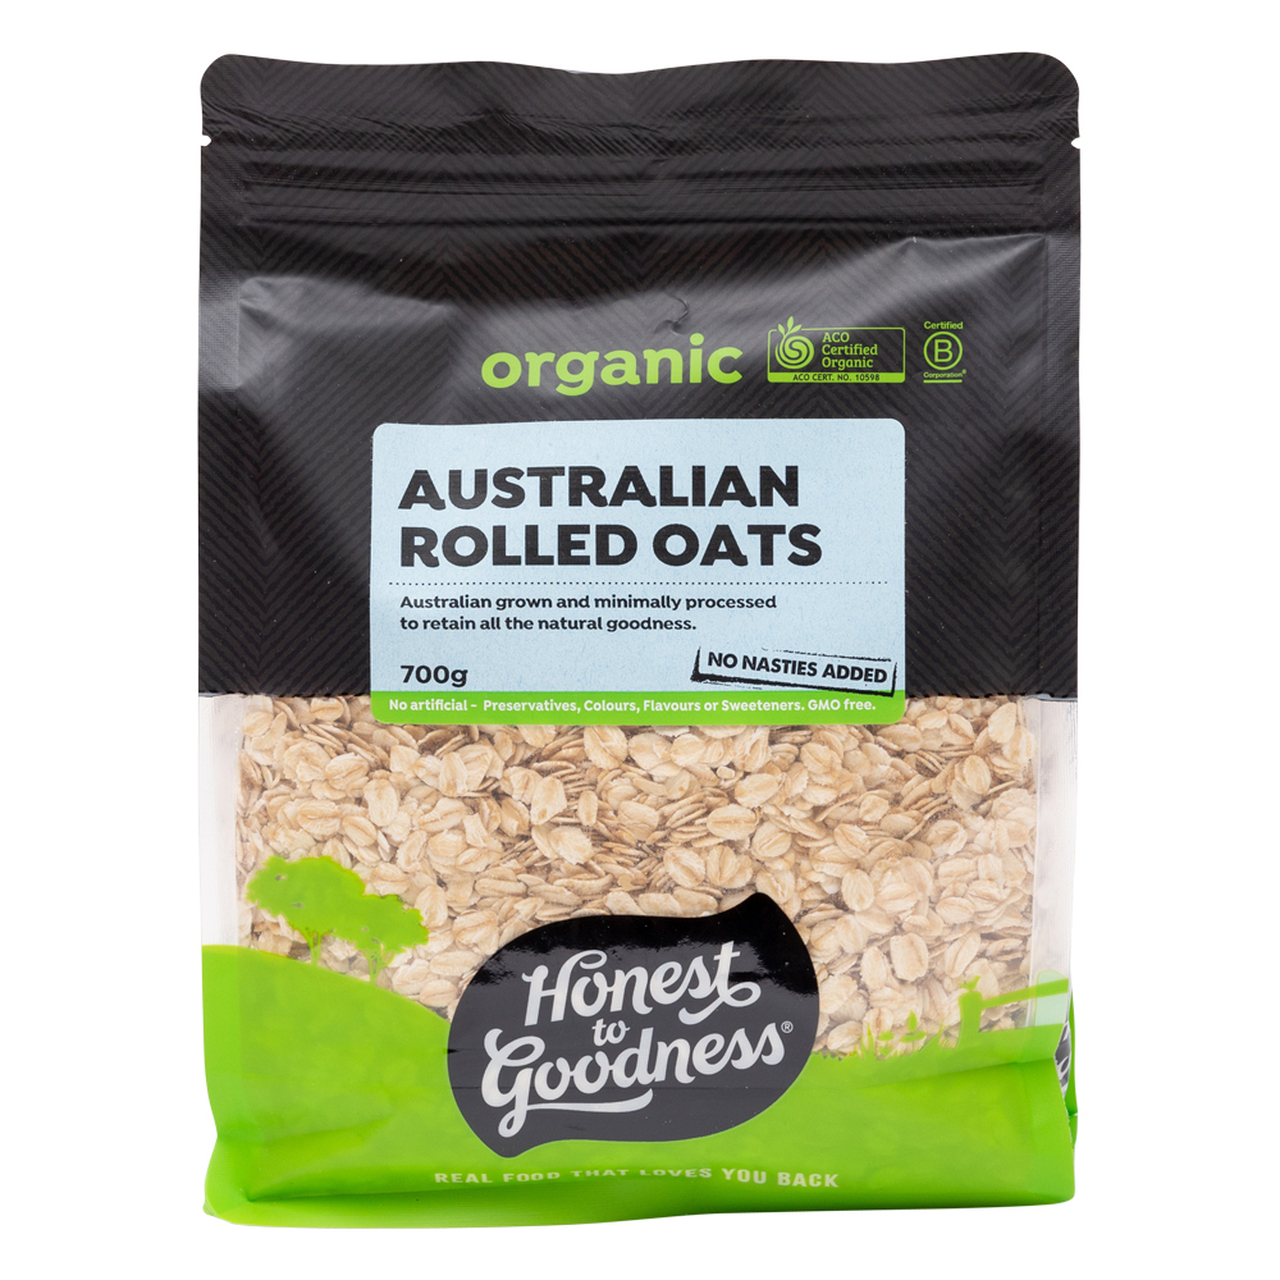 Oats Rolled Australian Goodness Certified Organic (700g)